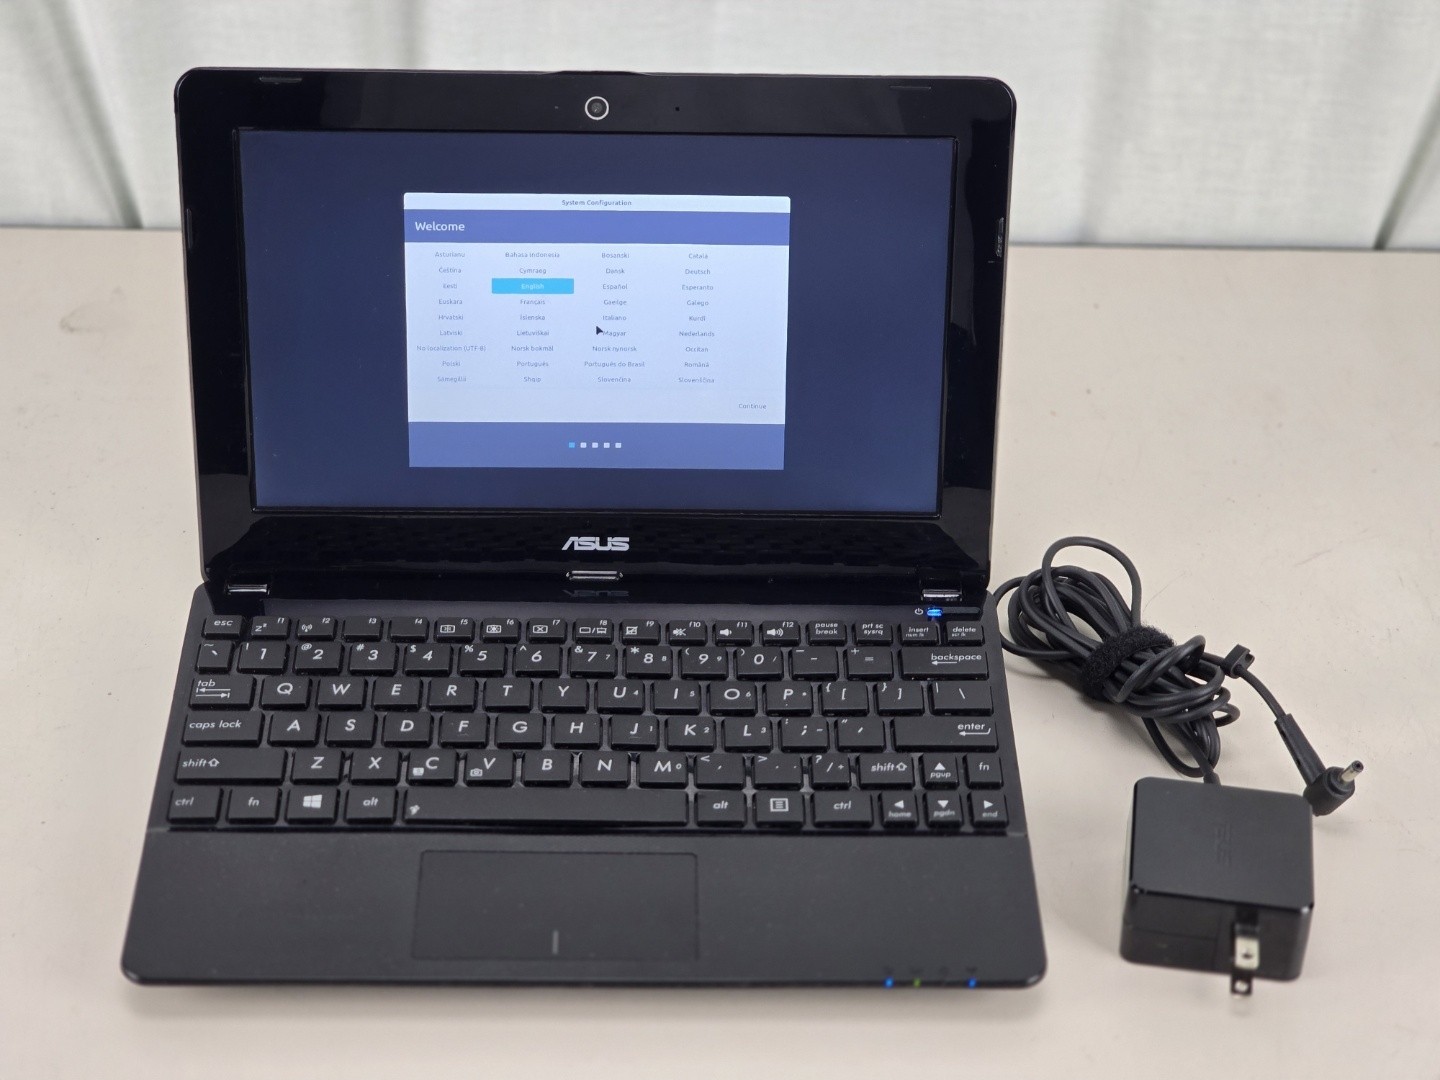 Asus 1015e 10.1 Laptop, Intel Celeron 847 1.10GHz, 2GB RAM, 120GB SSD Linux